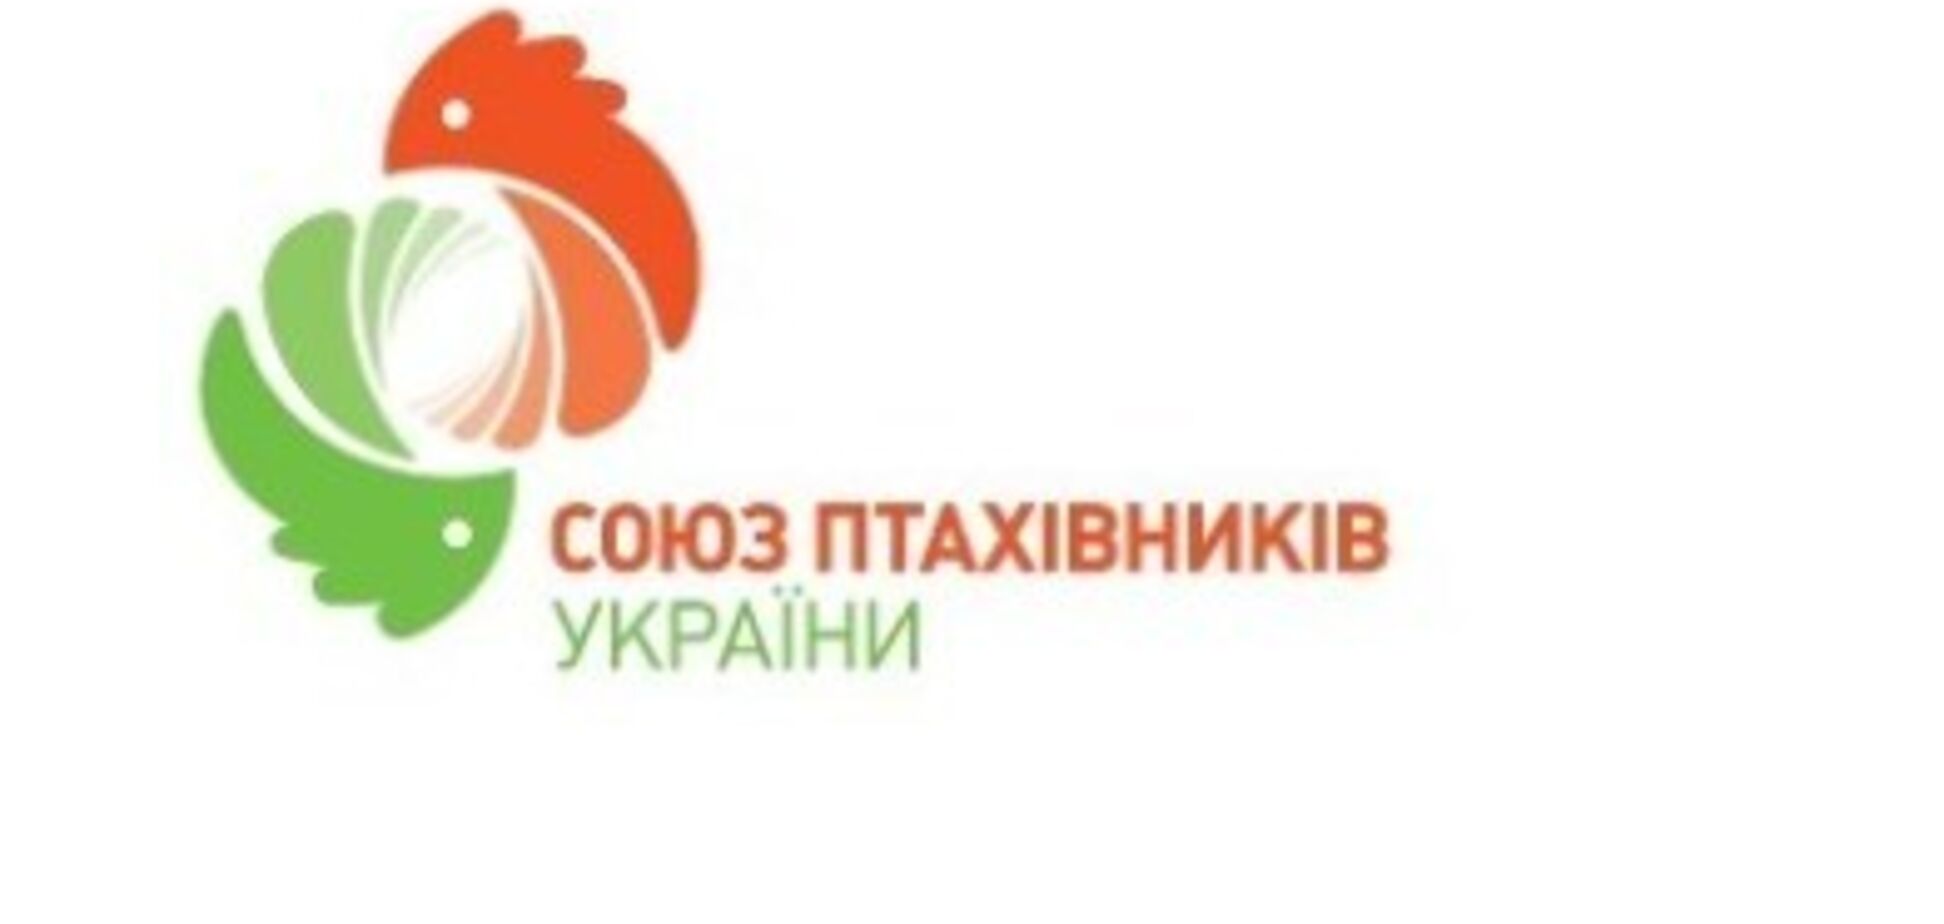 'Союз птицеводов Украины' поддержал агрохолдинг 'Авангард' Бахматюка